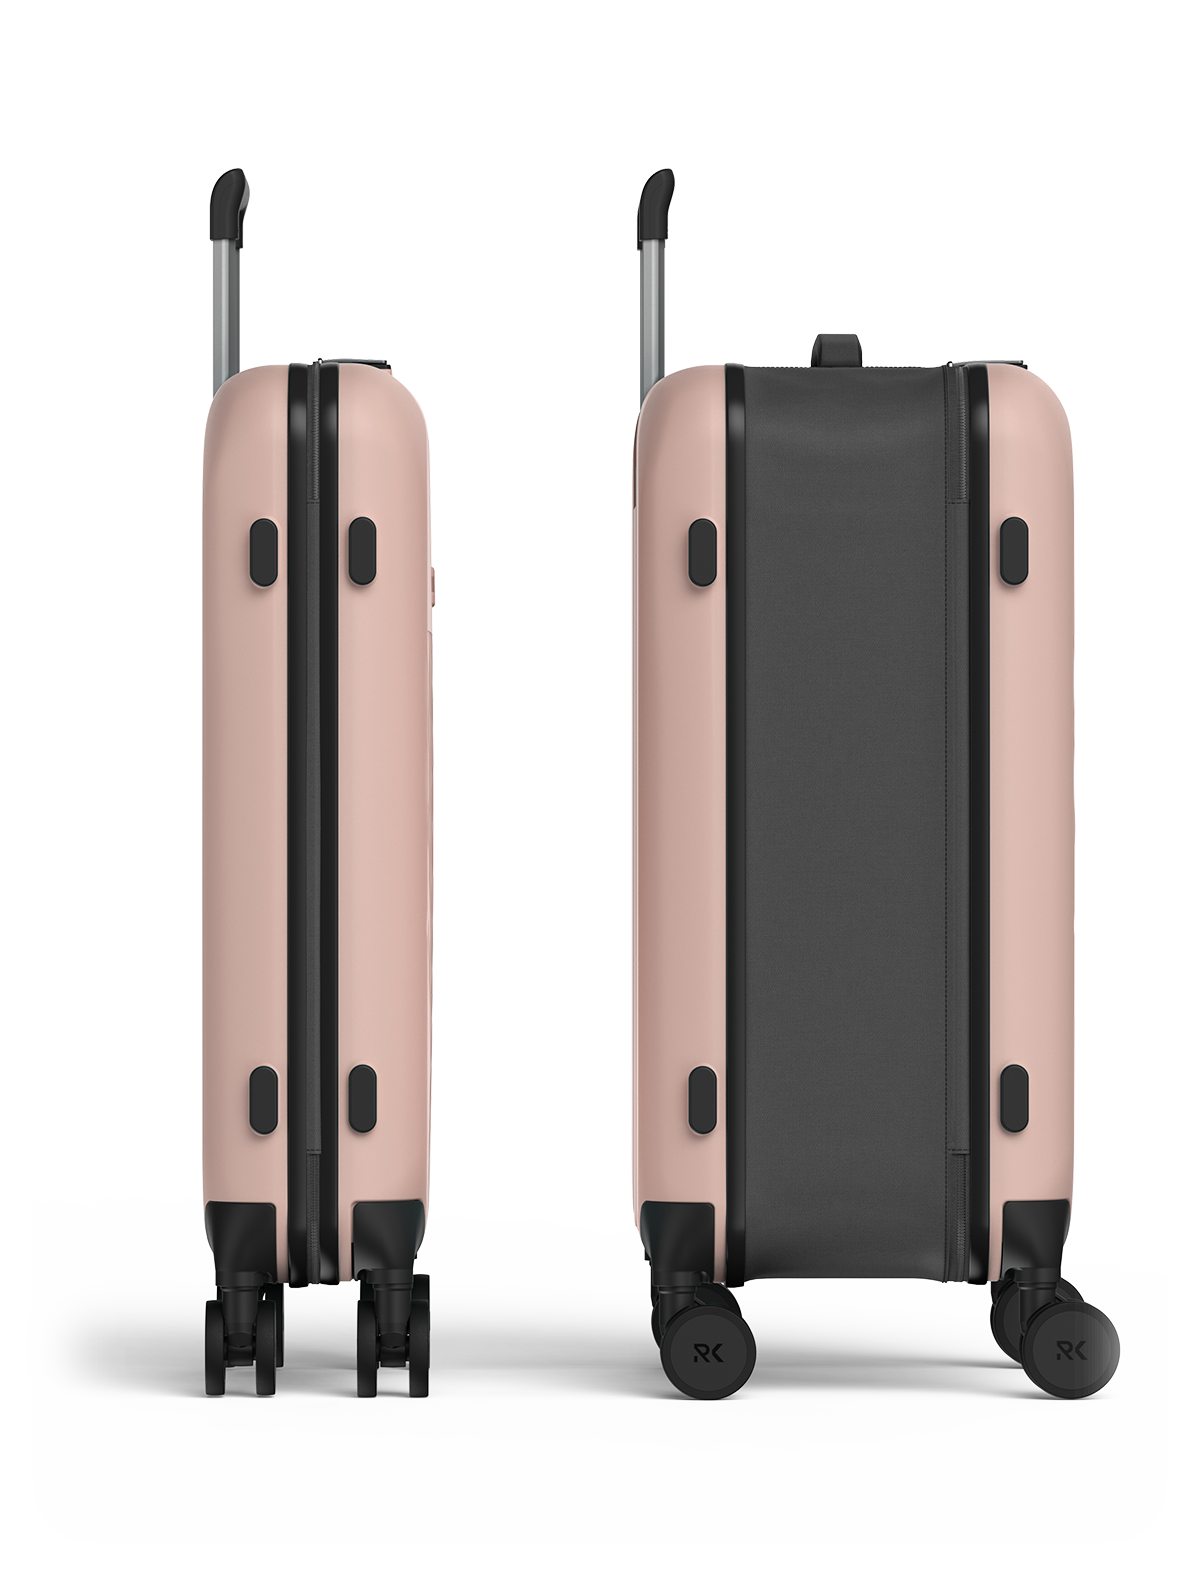 Rollink Flex 360° 4 Wheel Suitcase (VEGA 360°) - 26inch